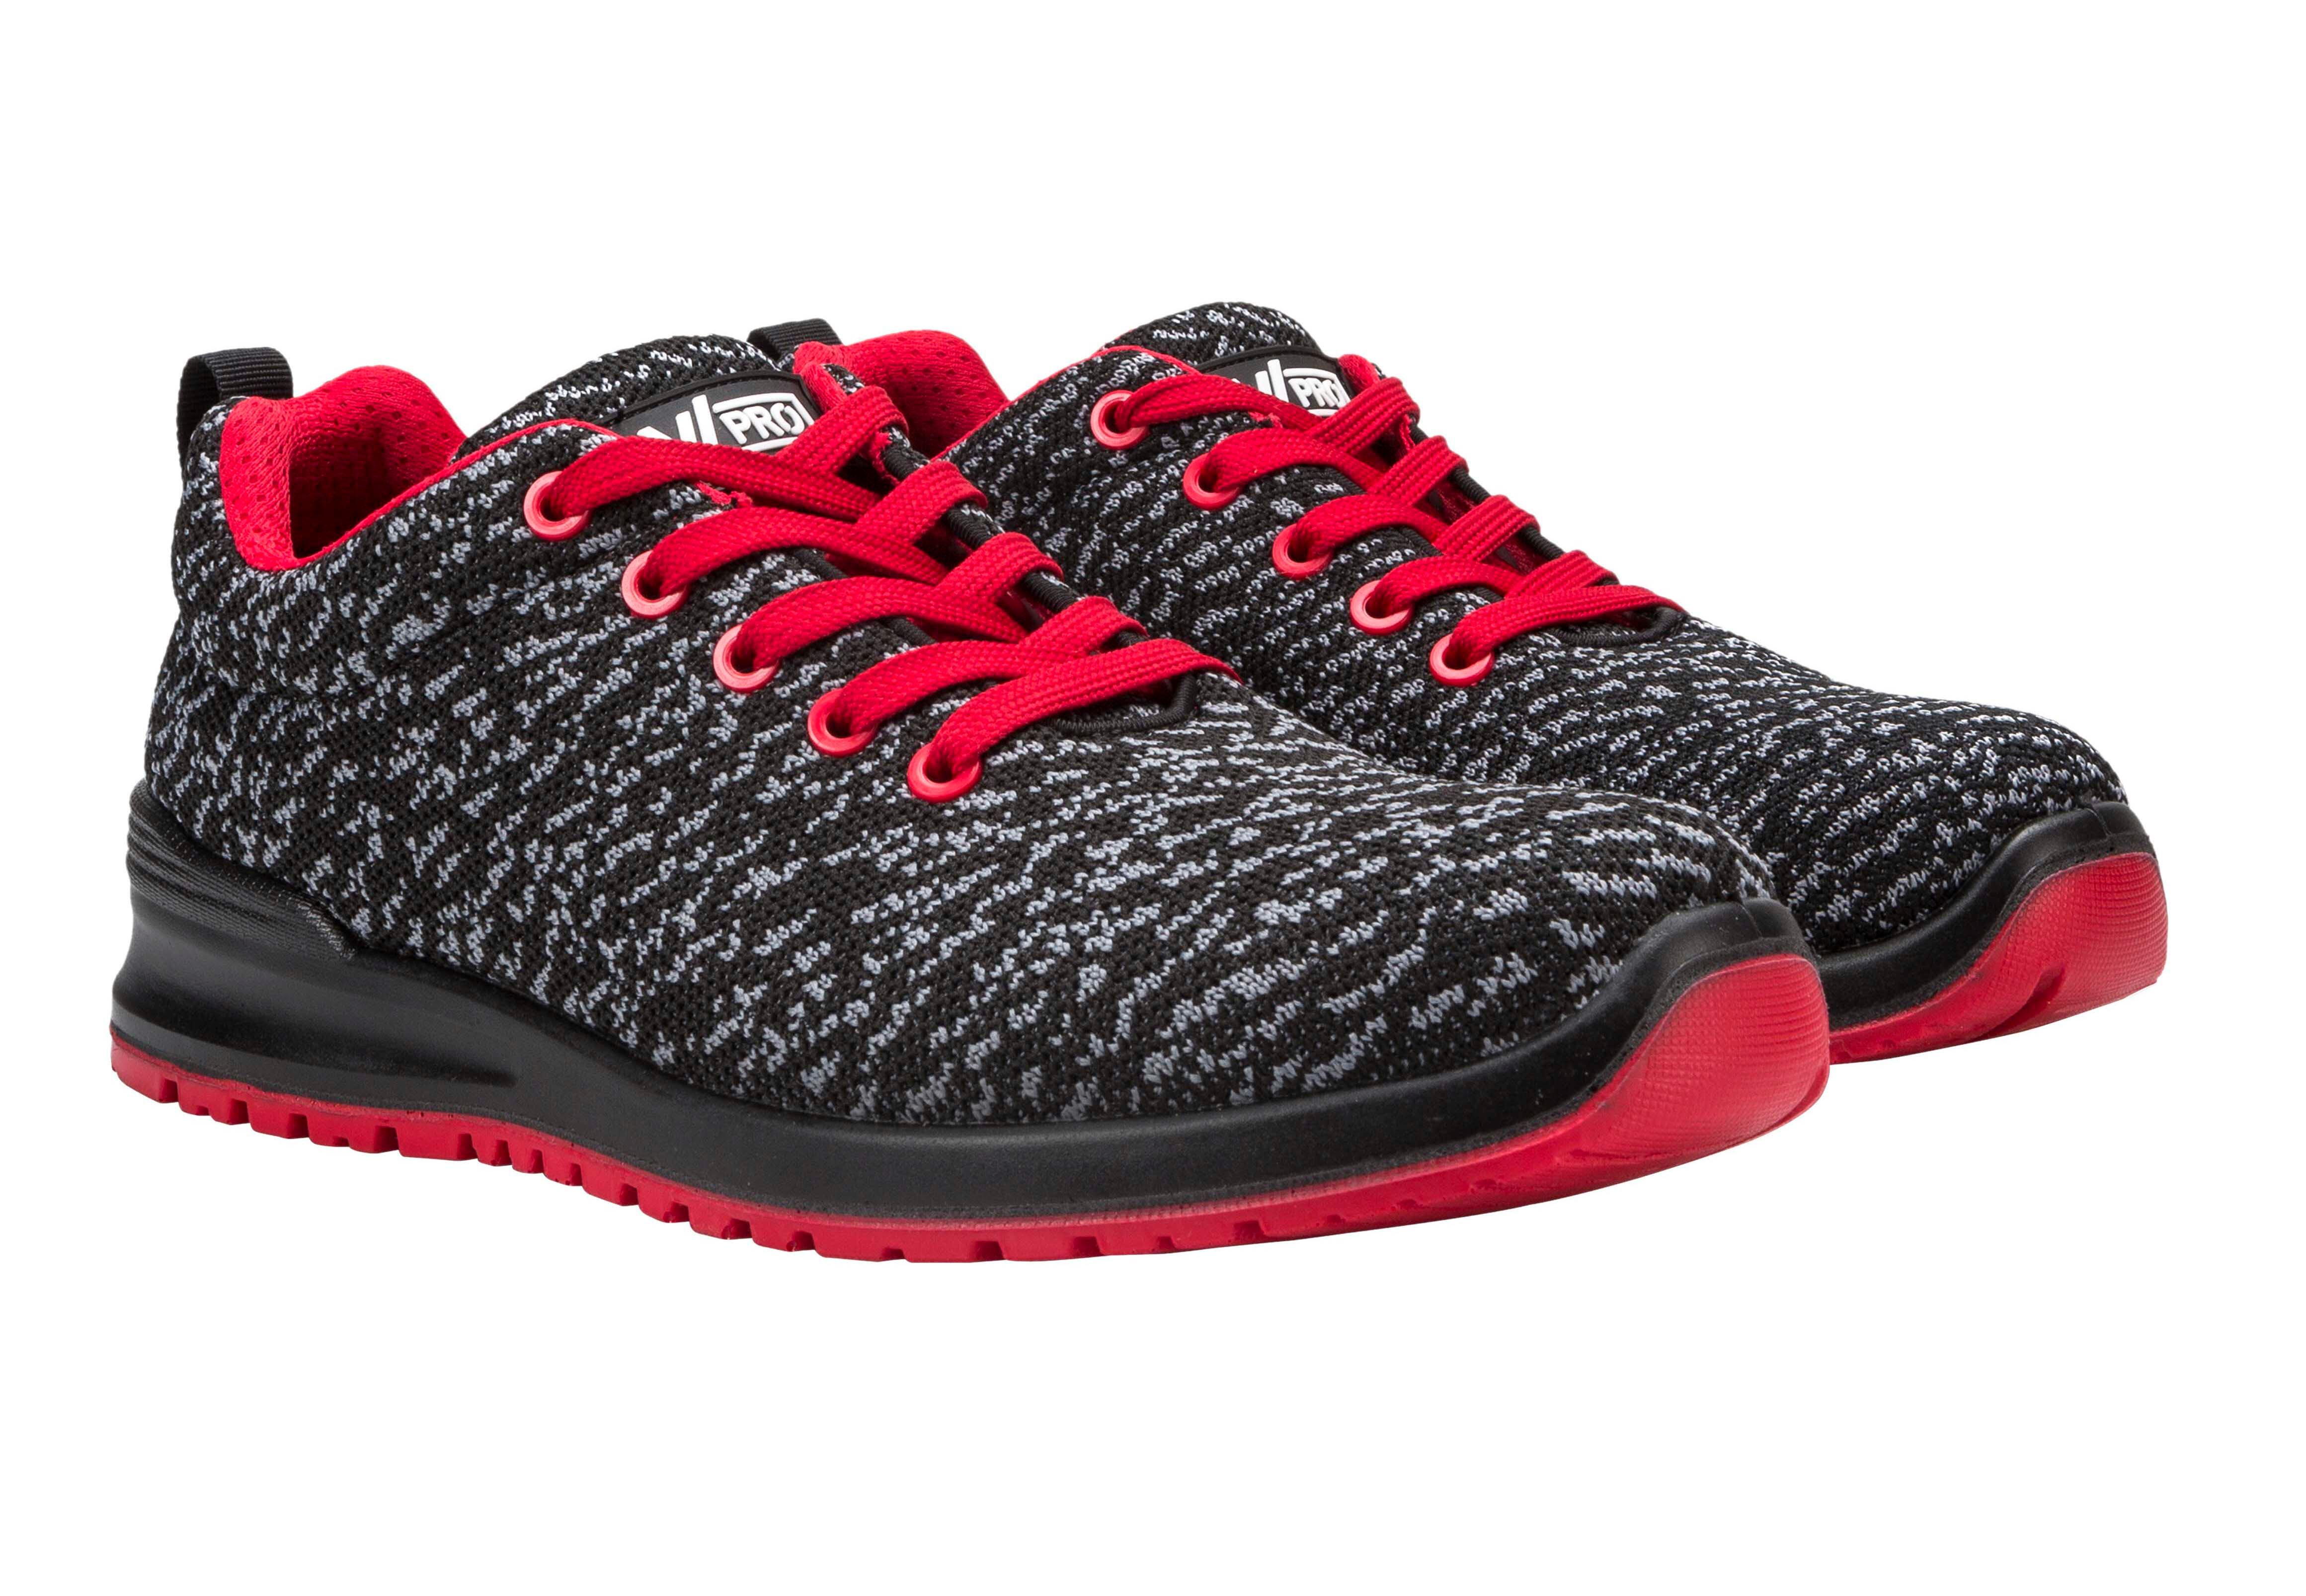 Zapato s1psrc metal rojo/negro t40